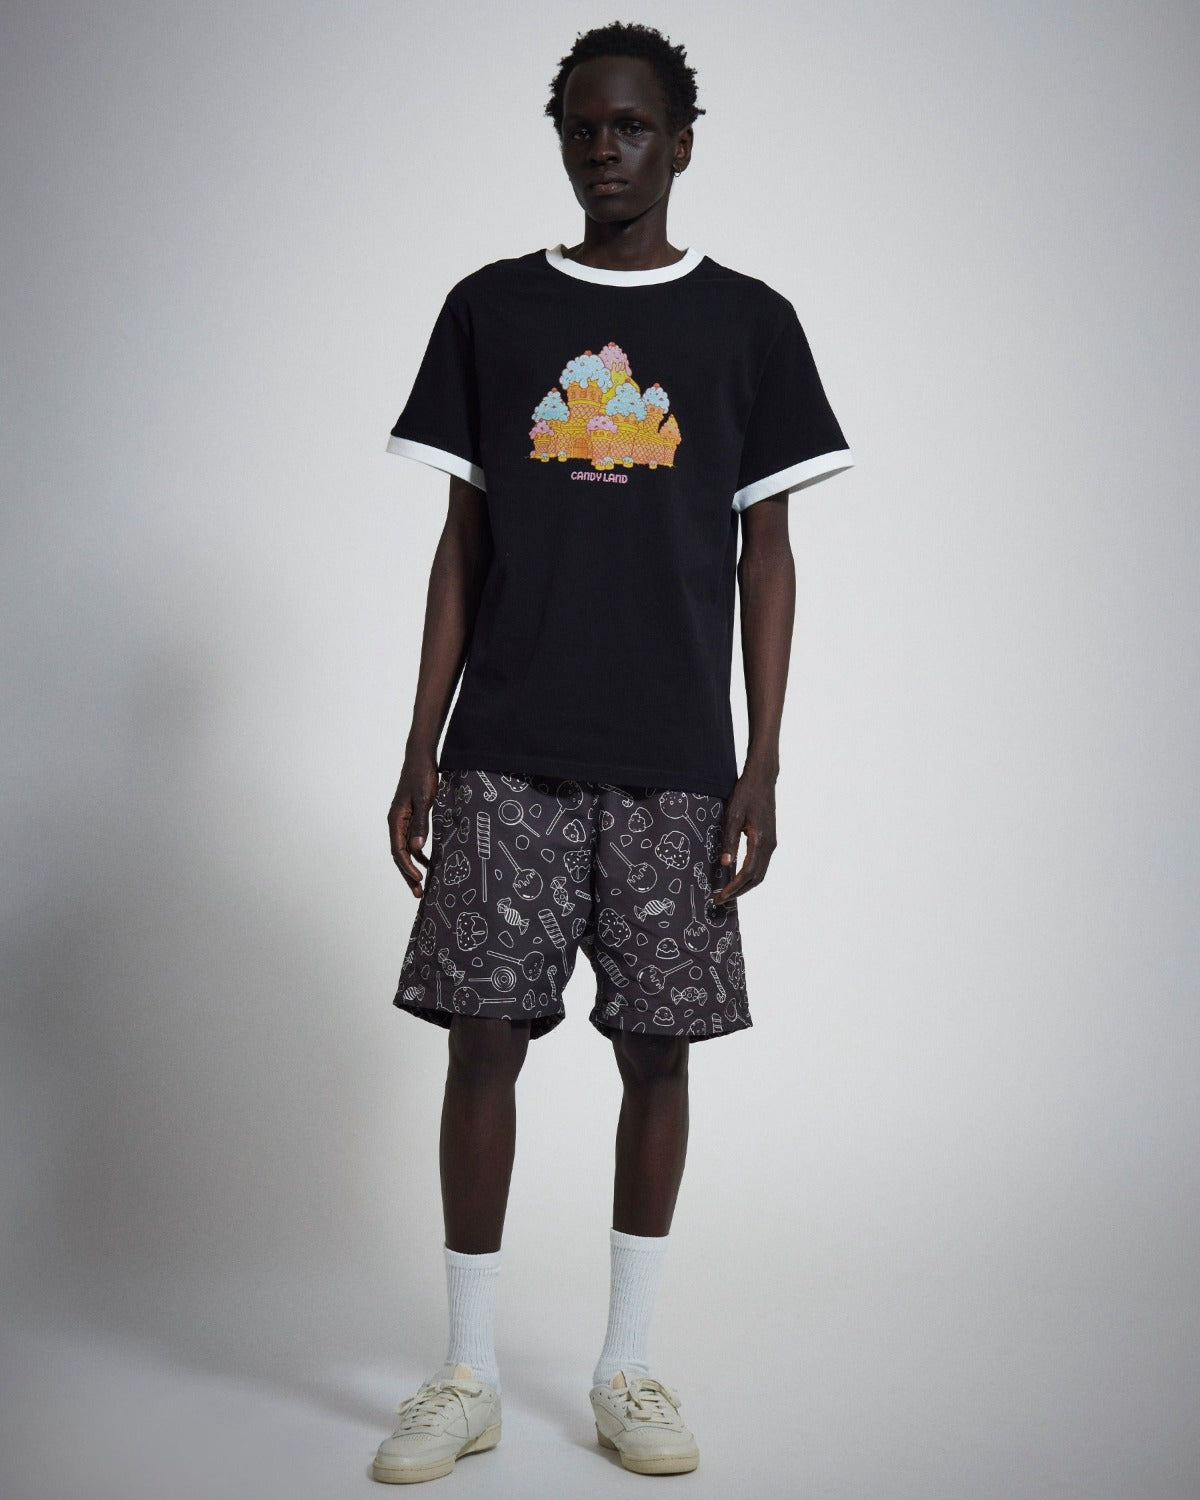 KROST x Candy Land | Gum Drop Short Sleeve 100 Cotton Black Tee T Shirts Mens Unique Streetwear